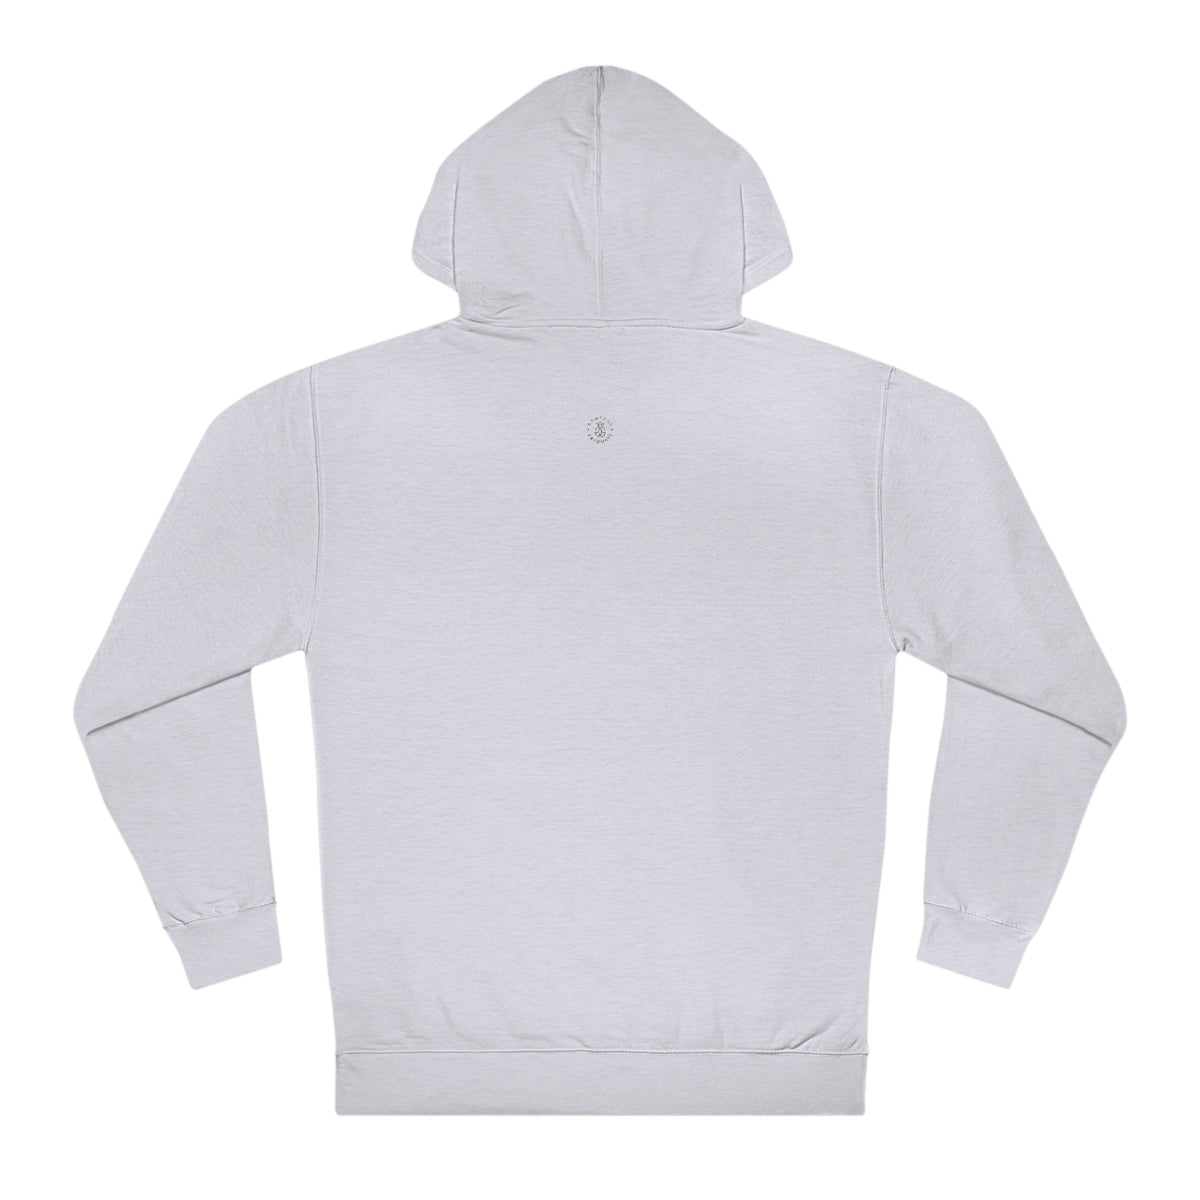 Kansas State Hooded Sweatshirt - GG - ITC